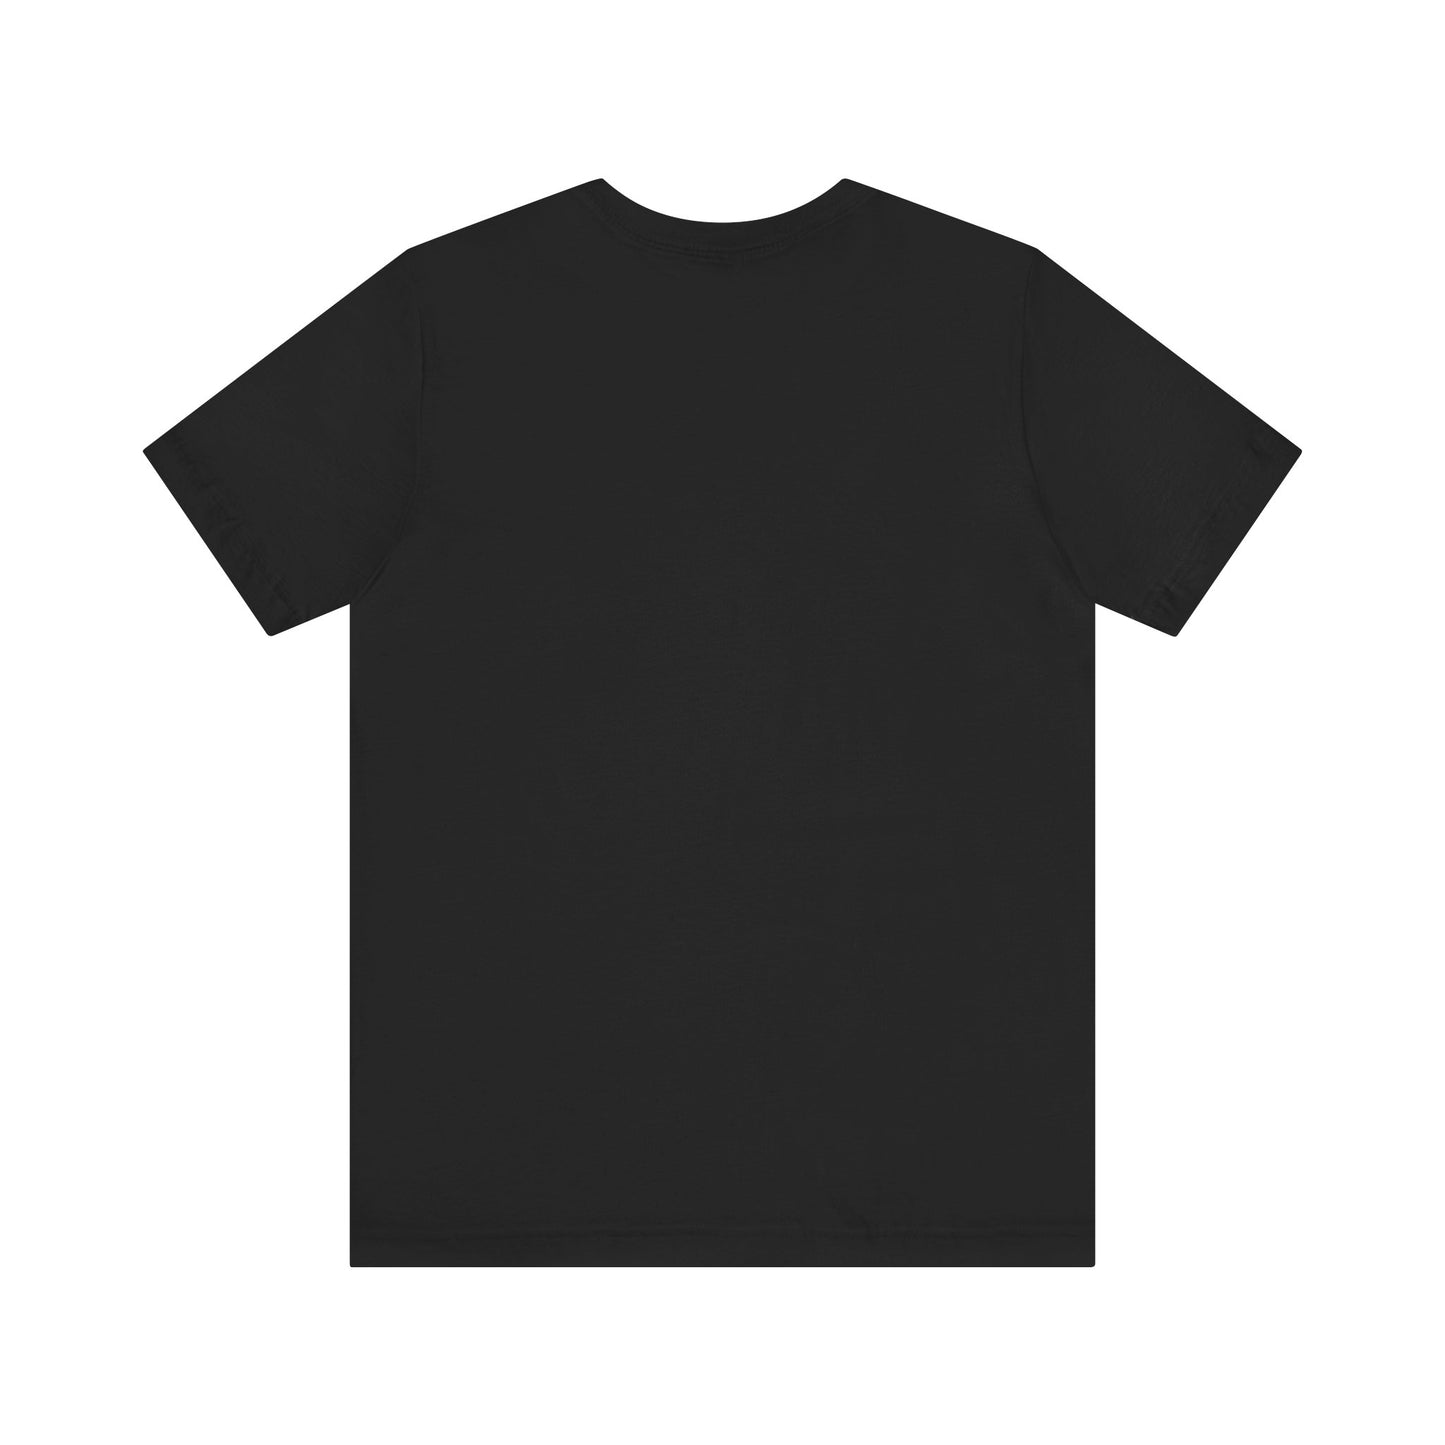 9 Mayo, Camiseta de manga corta de punto unisex